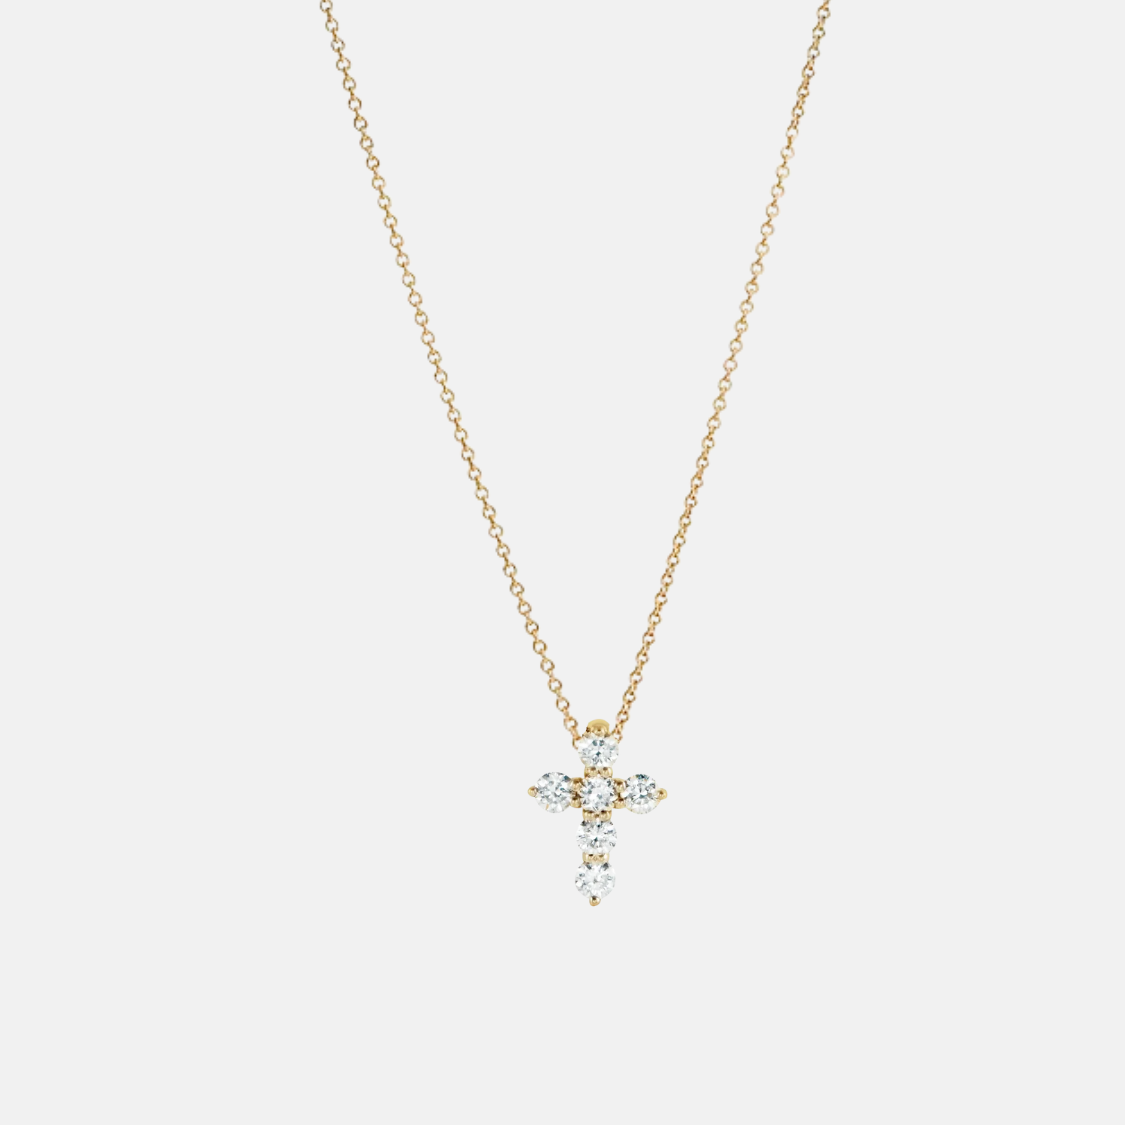 The Petite Diamond Cross Necklace